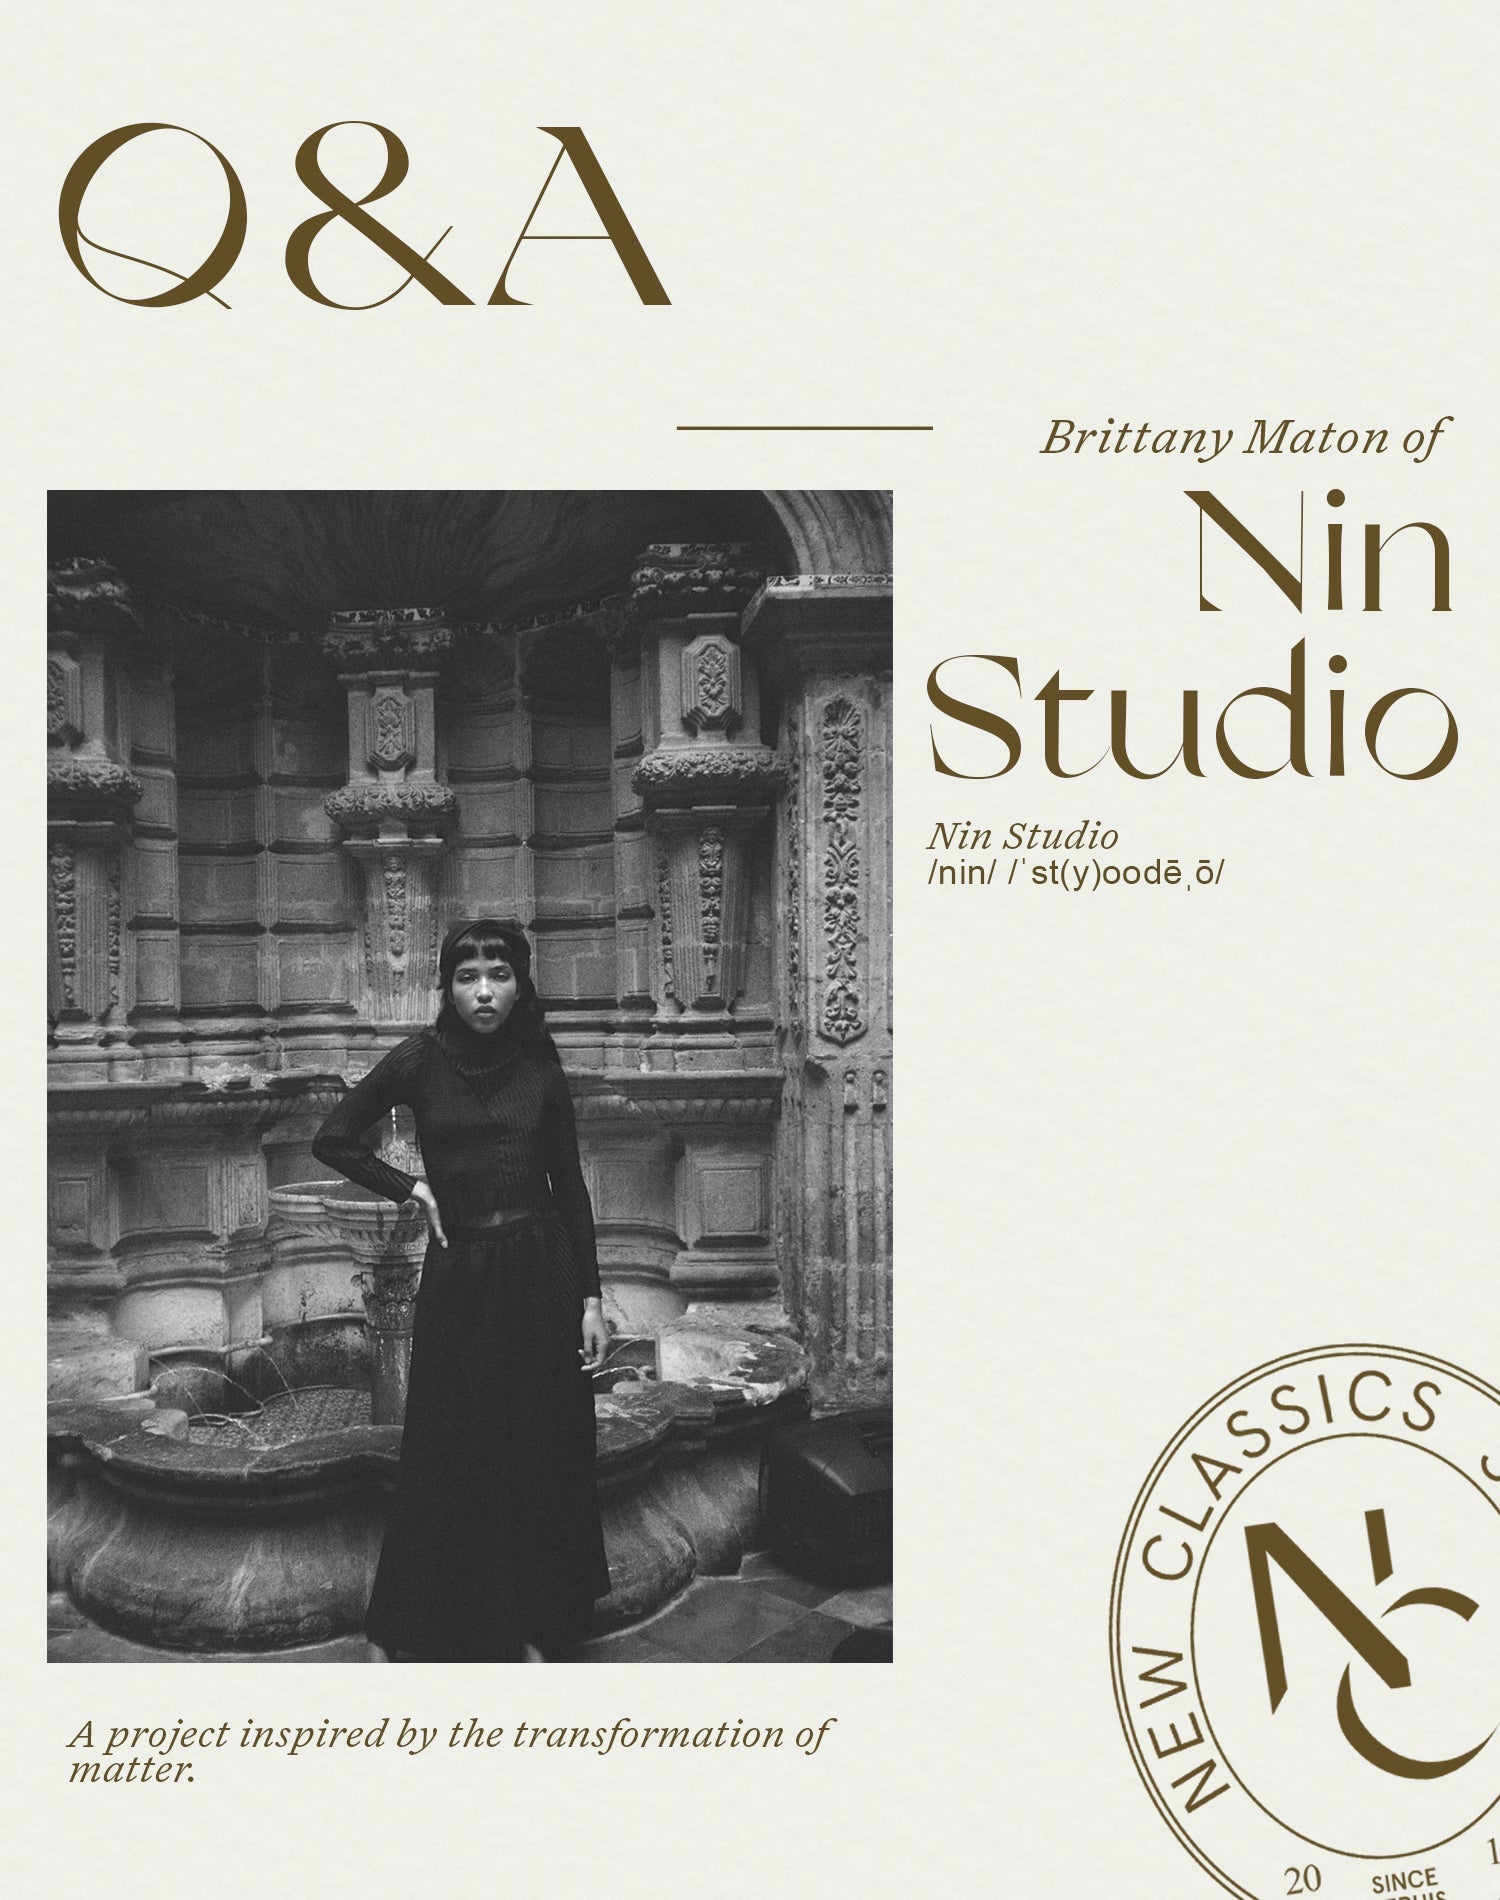 Q&A • Brittany Maton of Nin Studio